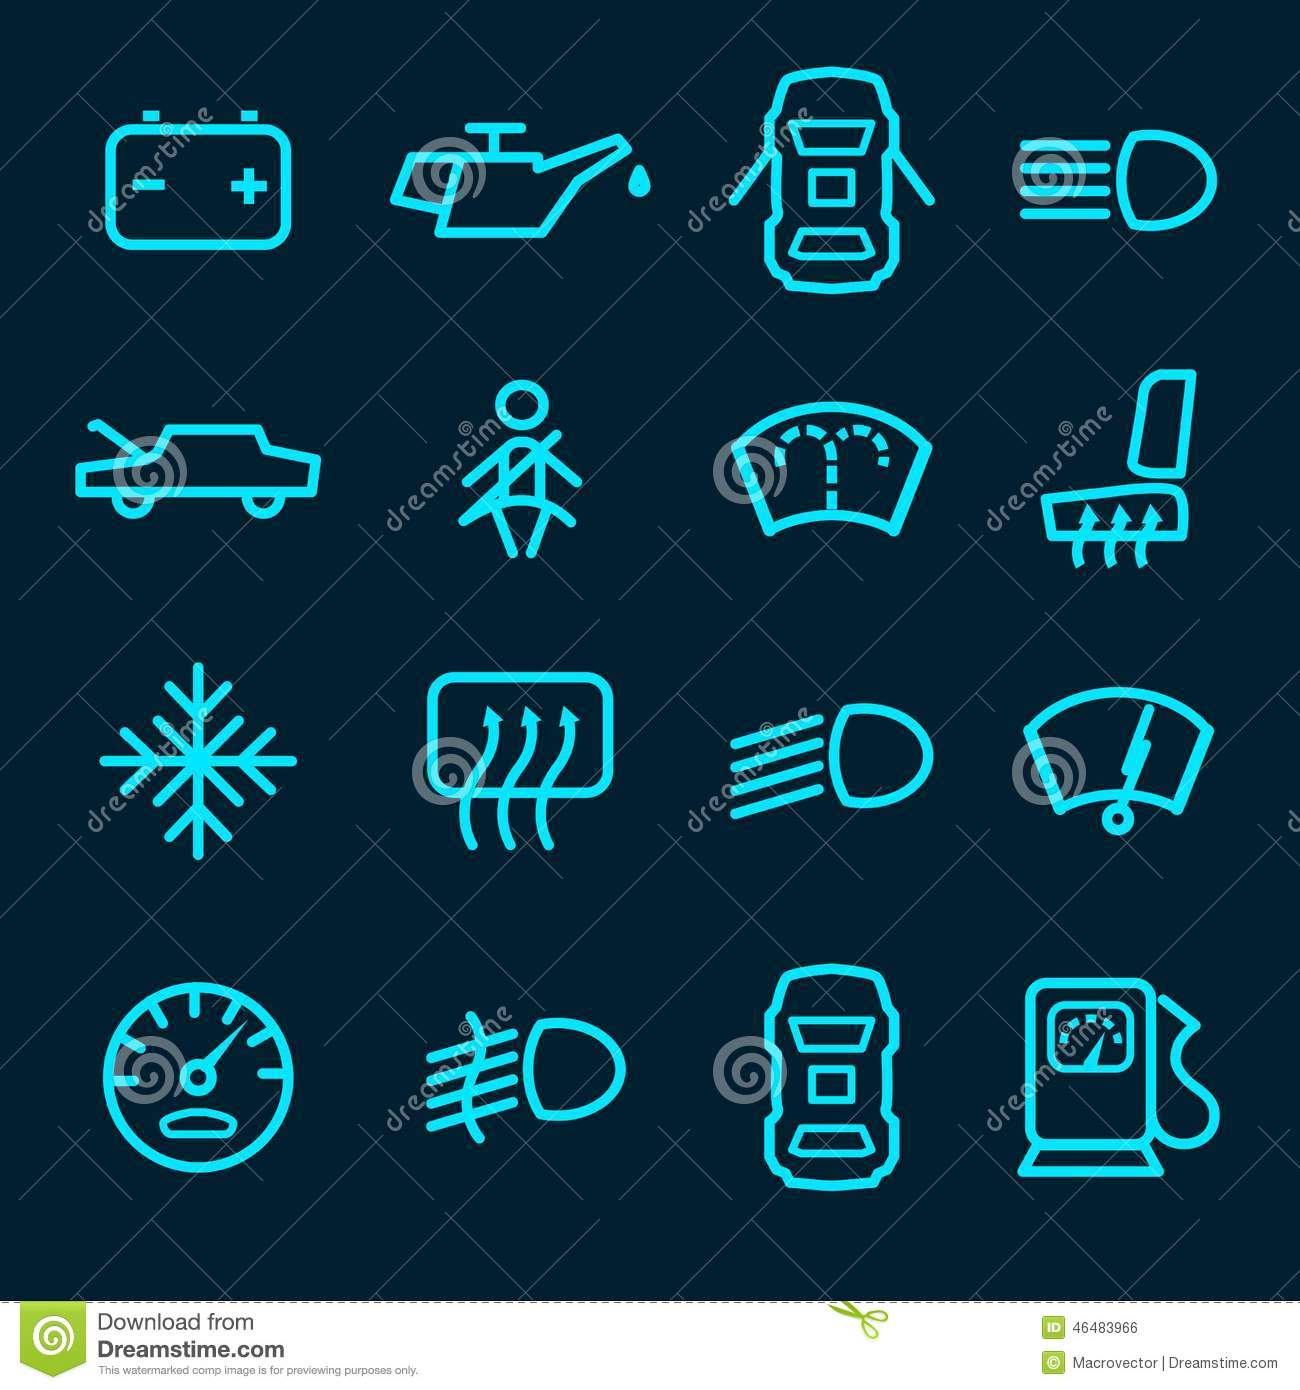 Icons Dashboard Warning Lights On Cars